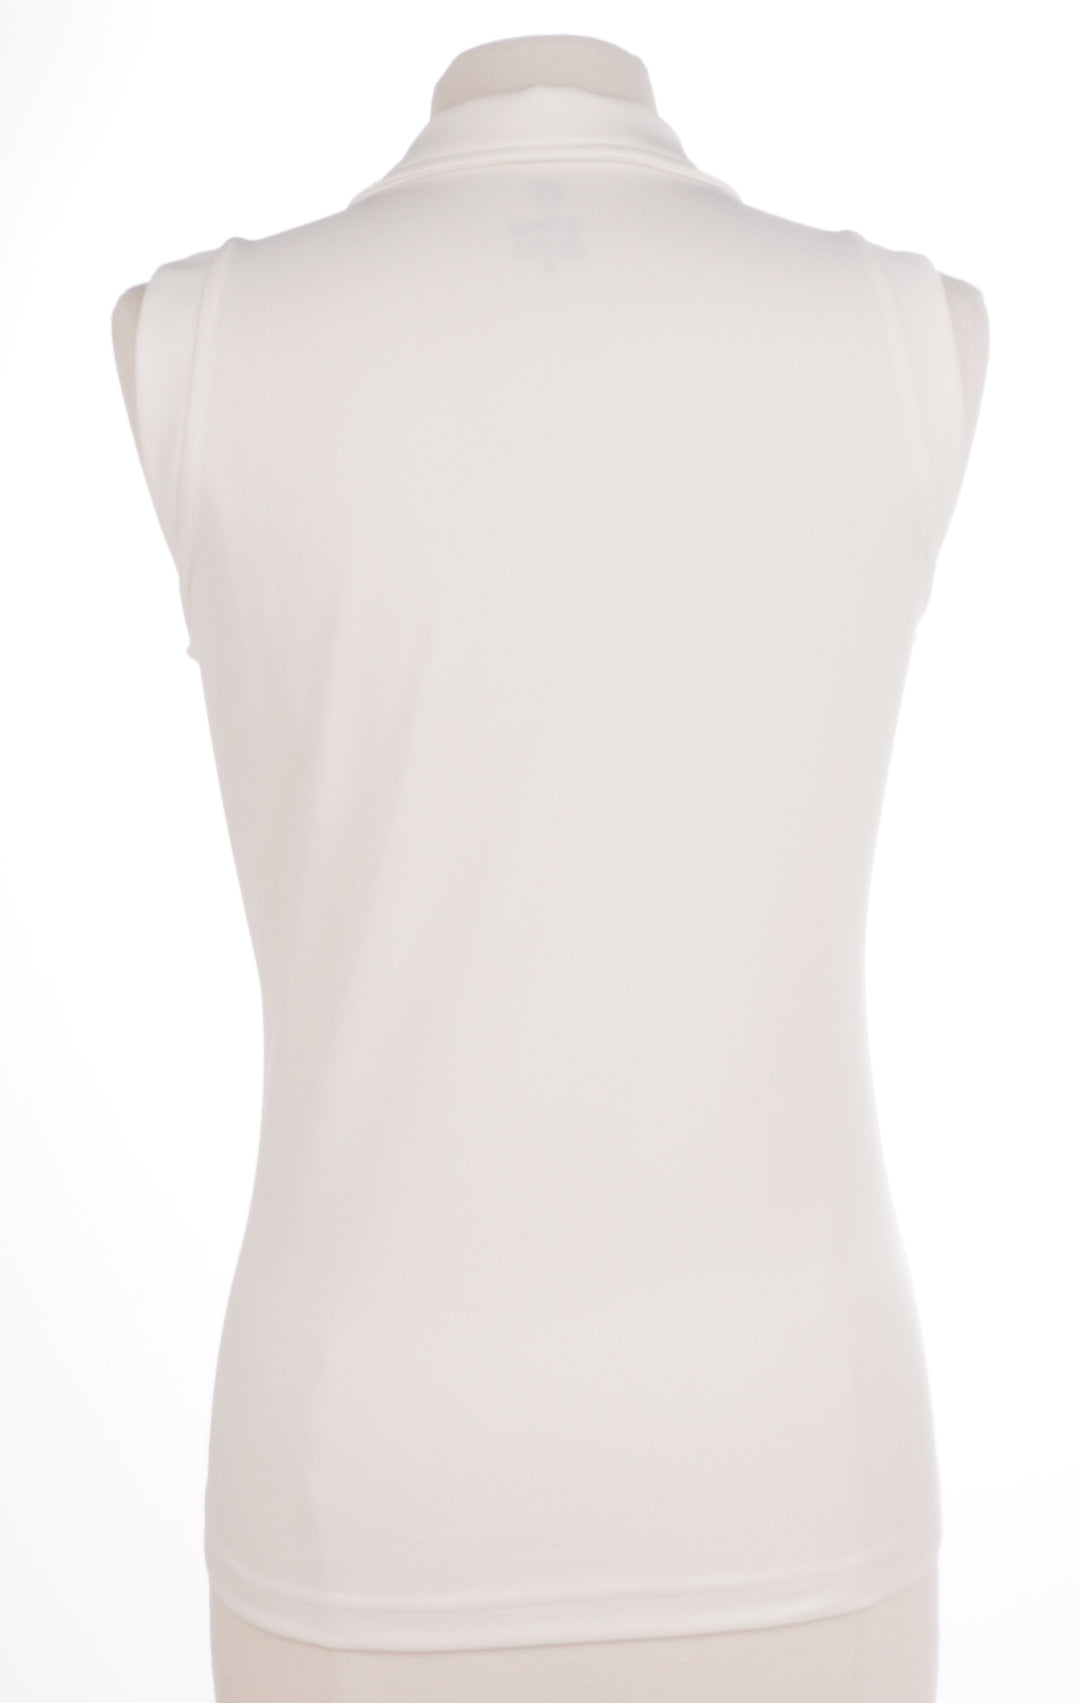 GGBlue Katy Sleeveless Top - Cream - Size Medium - Skorzie